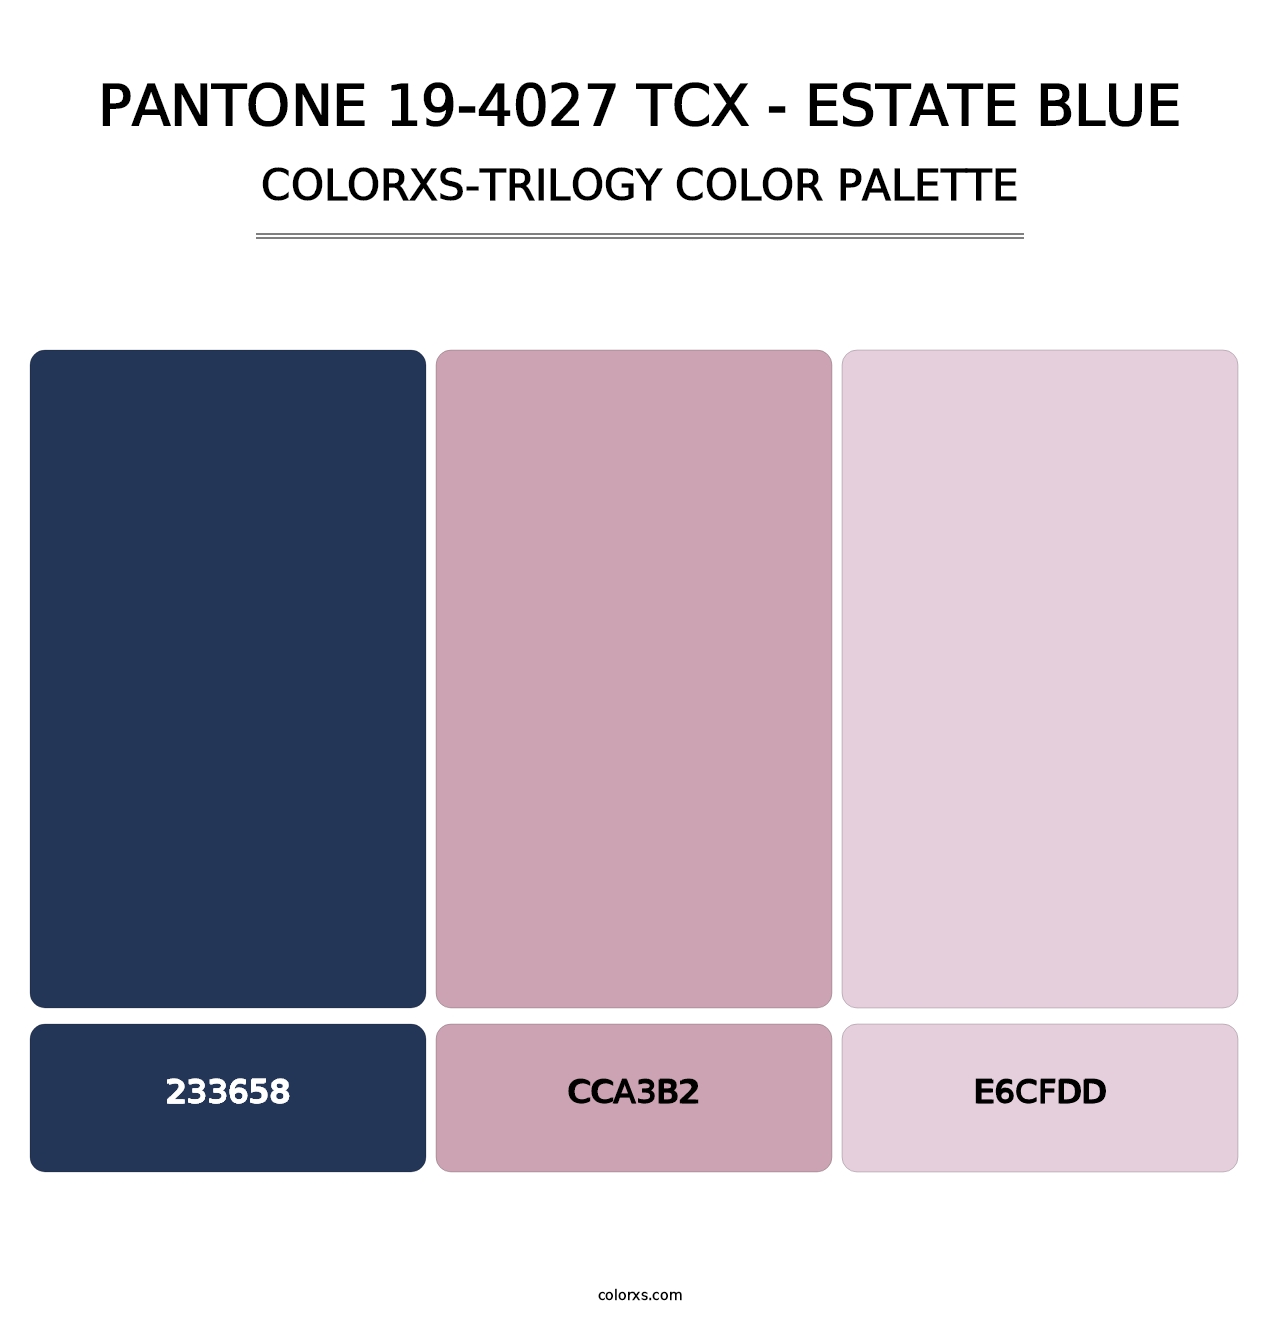 PANTONE 19-4027 TCX - Estate Blue - Colorxs Trilogy Palette